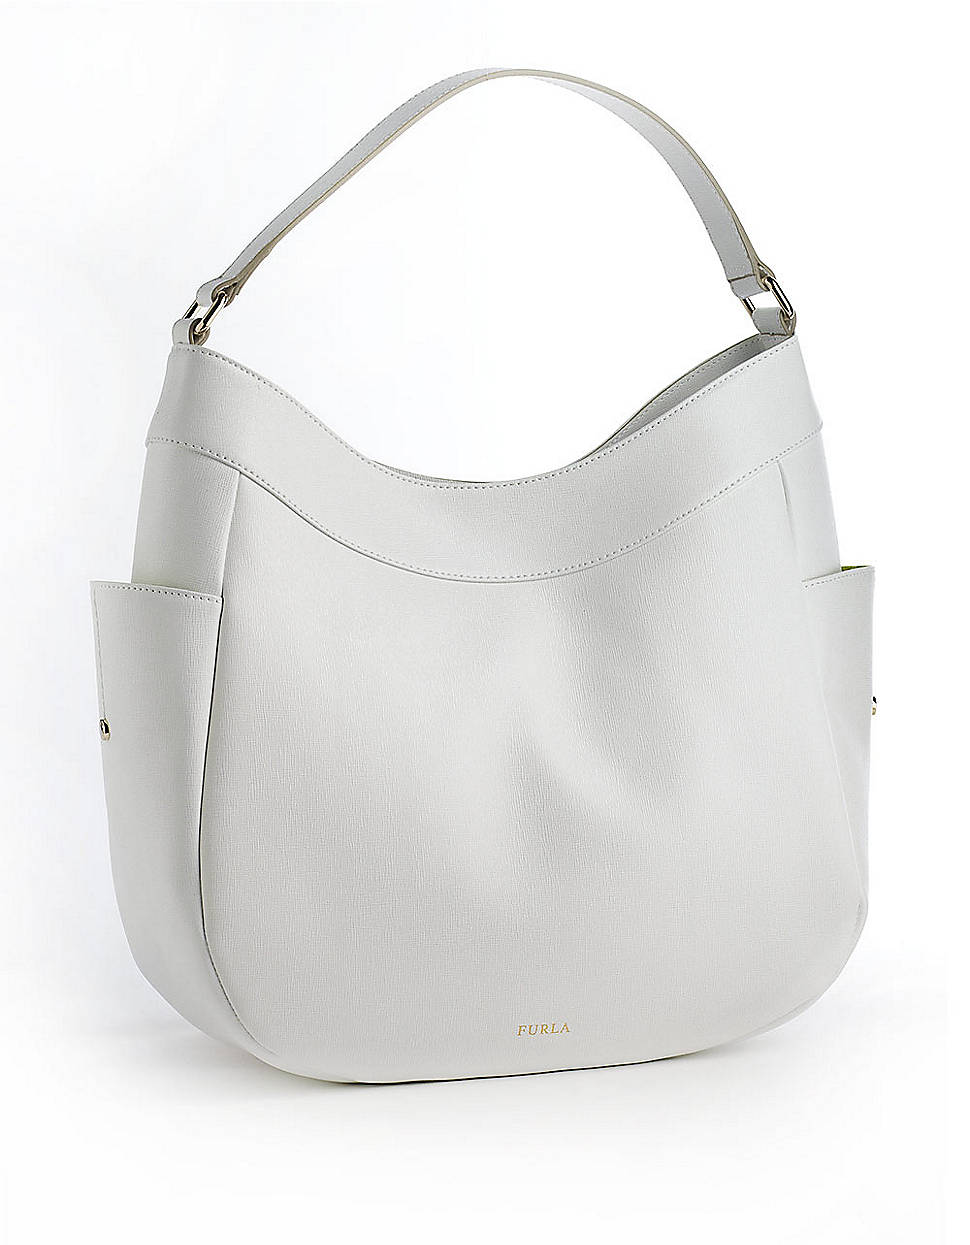 Furla Aura Leather Hobo Bag in White (luce) | Lyst